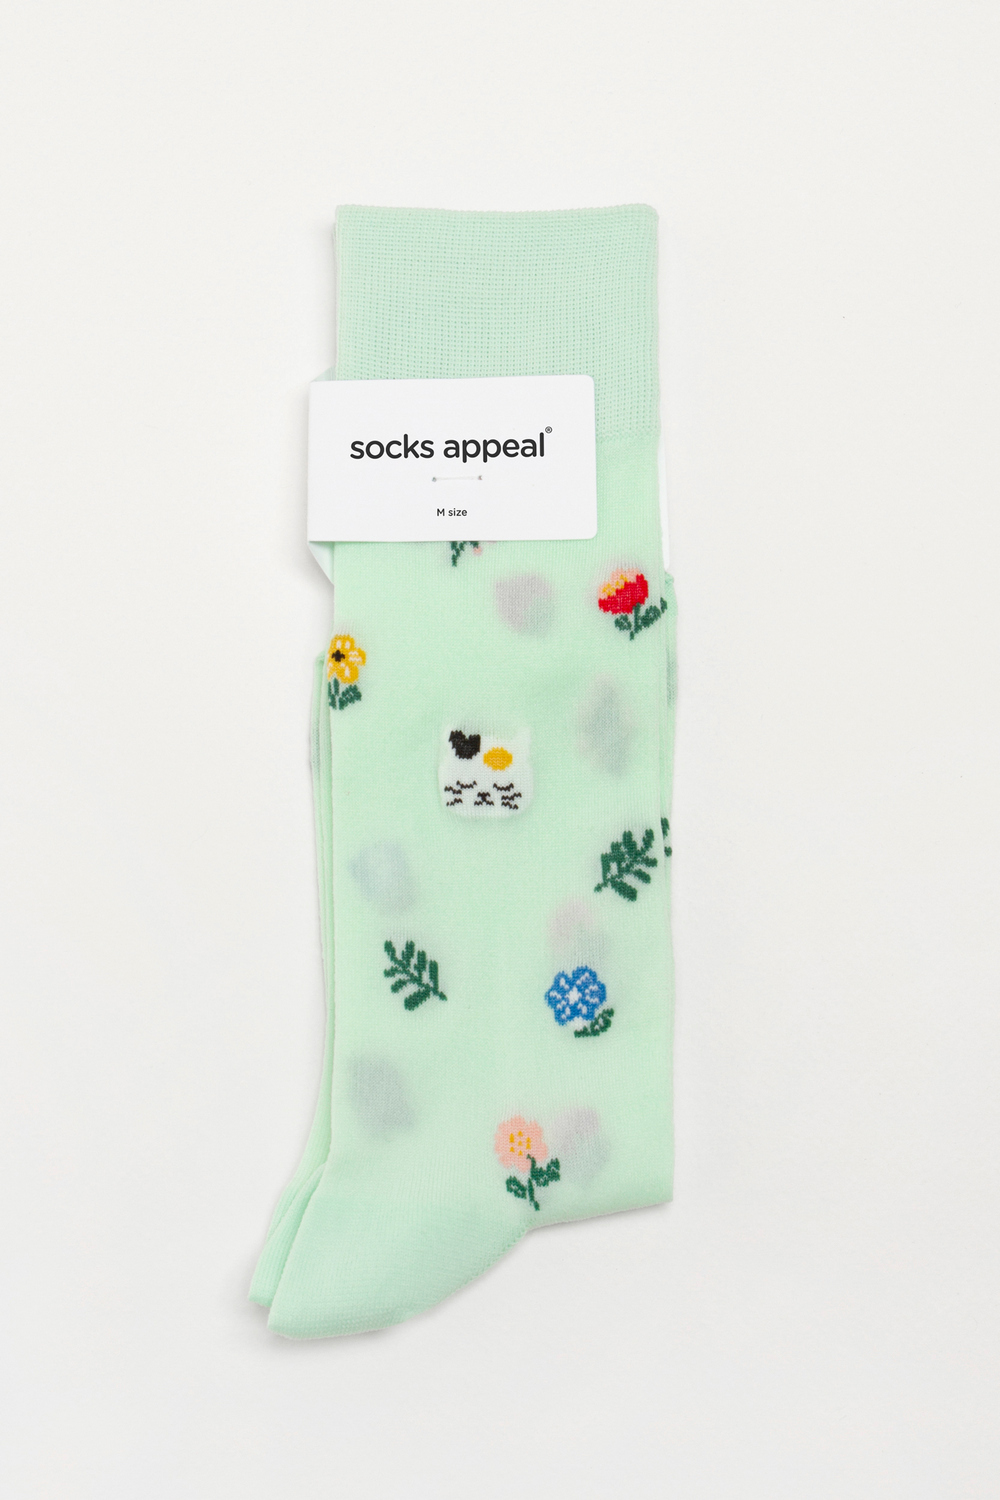 socks mint color image-S3L1